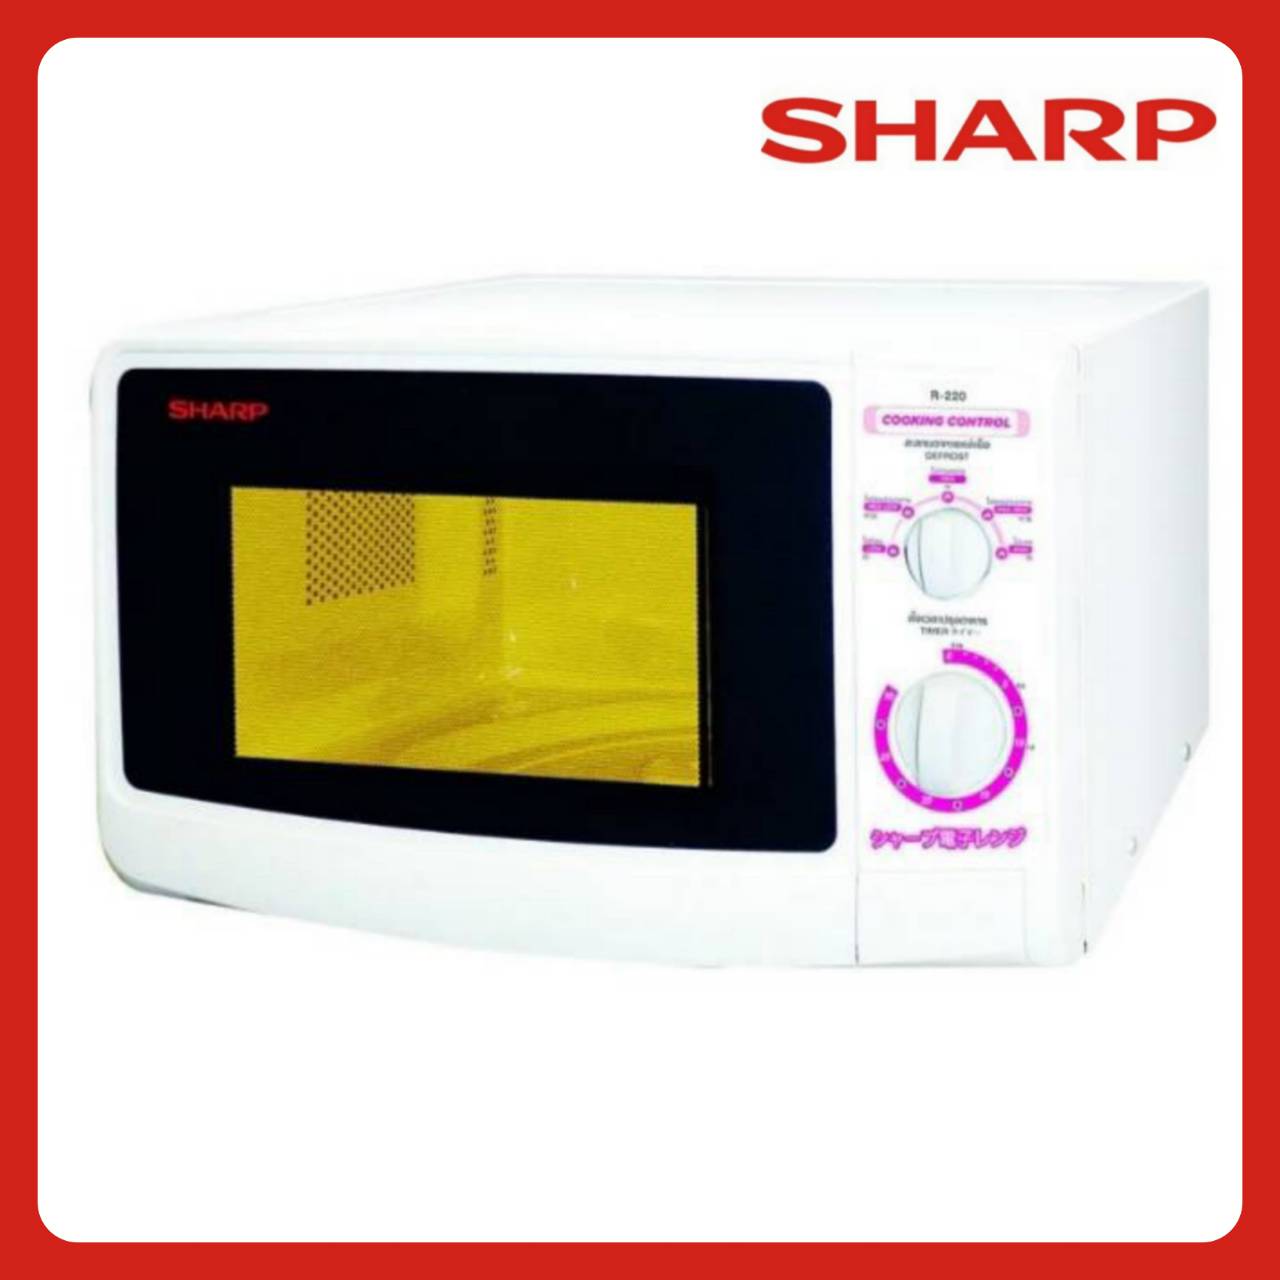 Sharp ชาร์ป ไมโครเวฟ ลูกบิด 22 ลิตร รุ่น R-222/R-220 1 เครื่อง Sharp Microwave R-222/R-220 บริการเก็บเงินปลายทาง